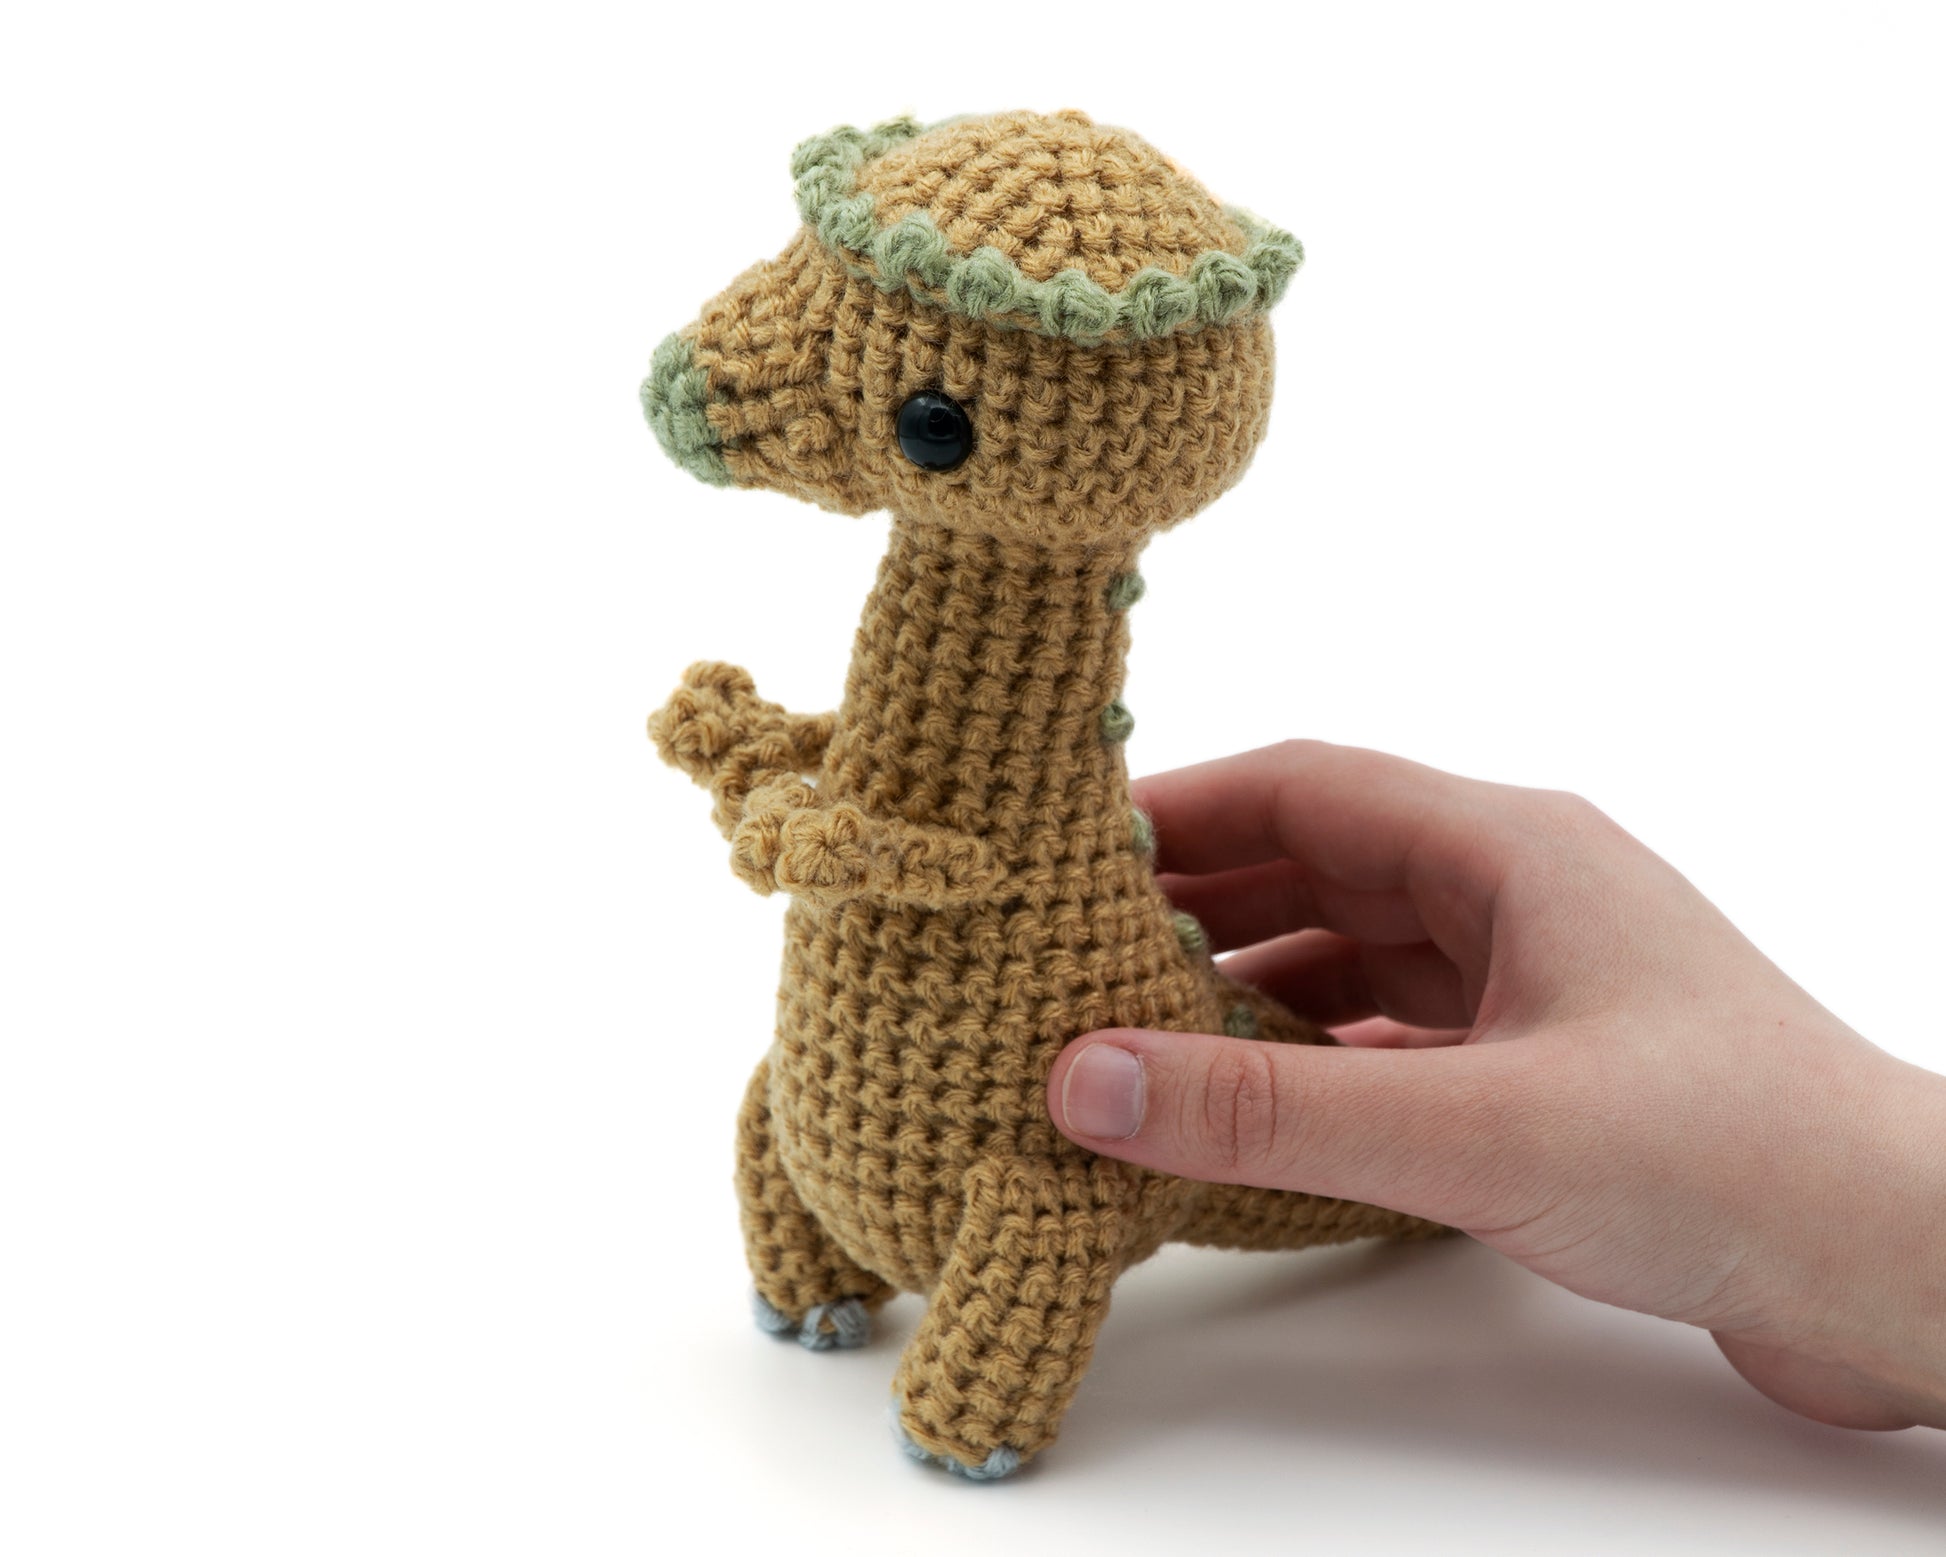 amigurumi crochet pachycephalosaurus pattern in hand for size comparison